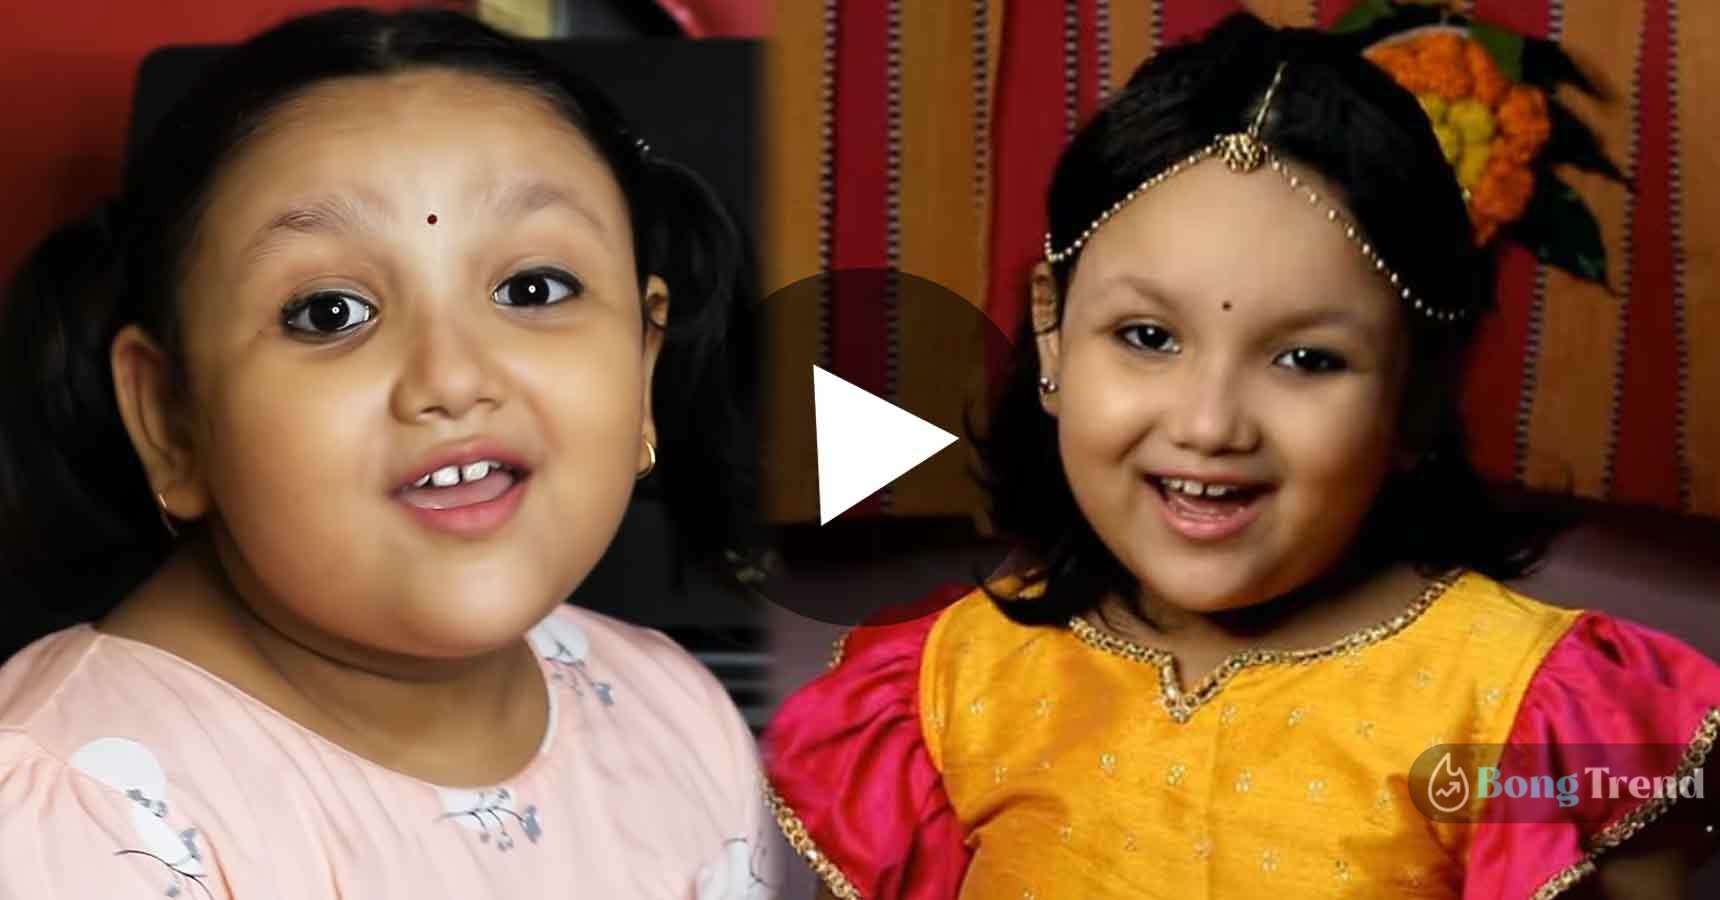 Viral Video,Hridisrota Mondal,ভাইরাল ভিডিও,হৃদিস্রোতা,গান